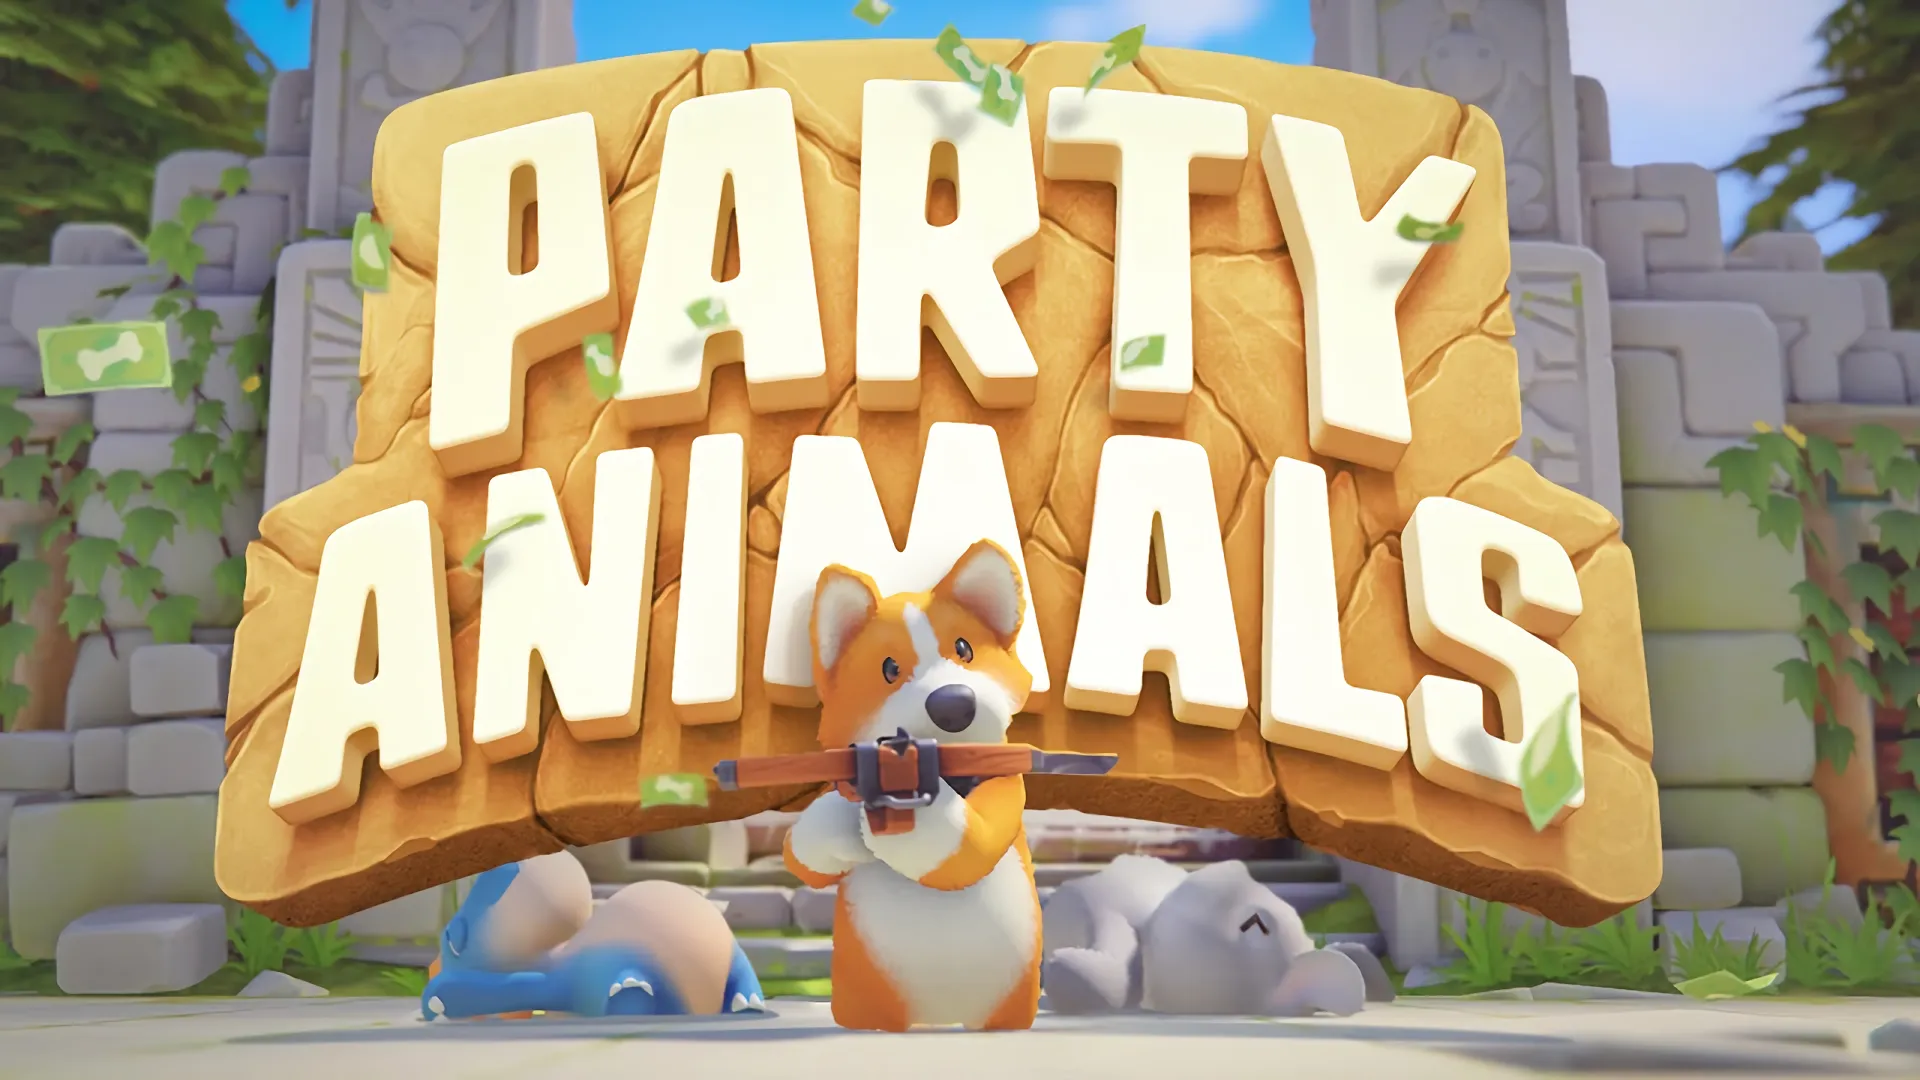 Is Party Animals split screen?